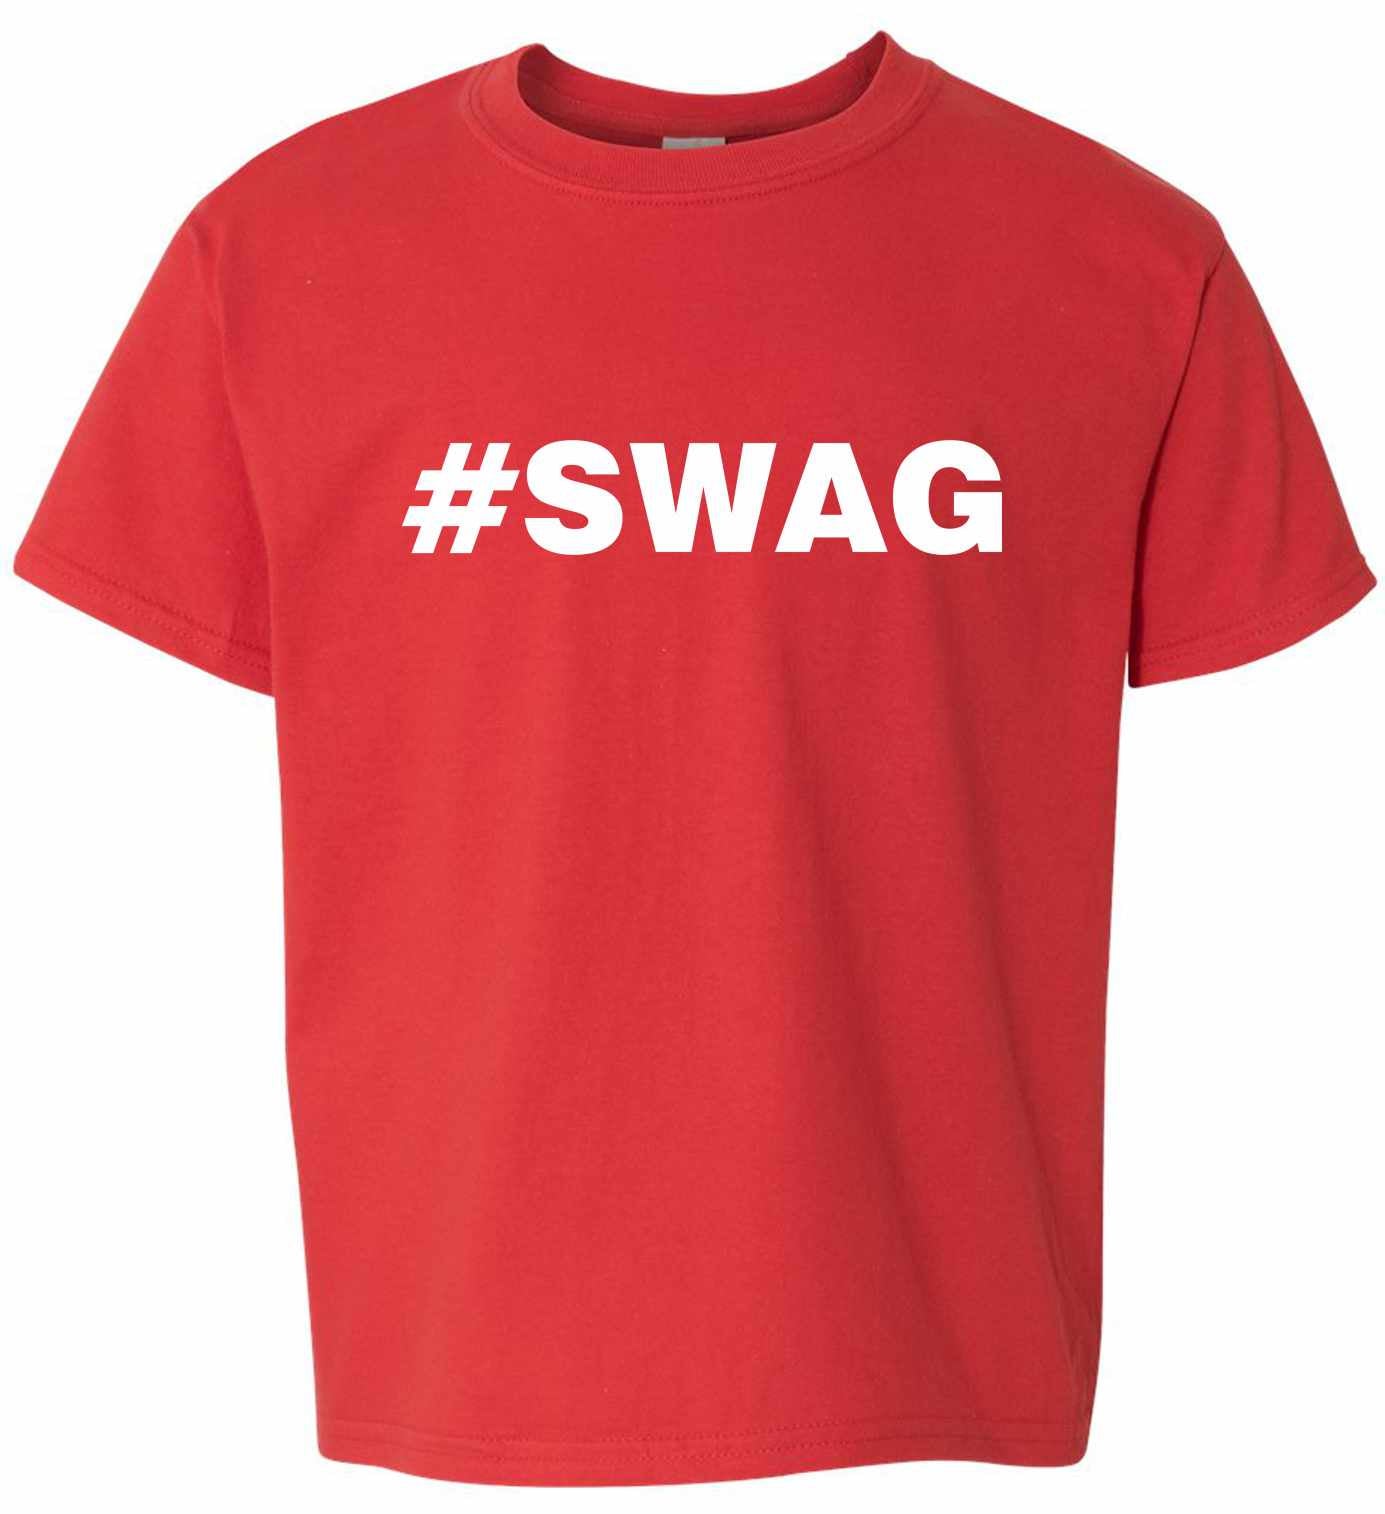 SWAG on Kids T-Shirt (#800-201)